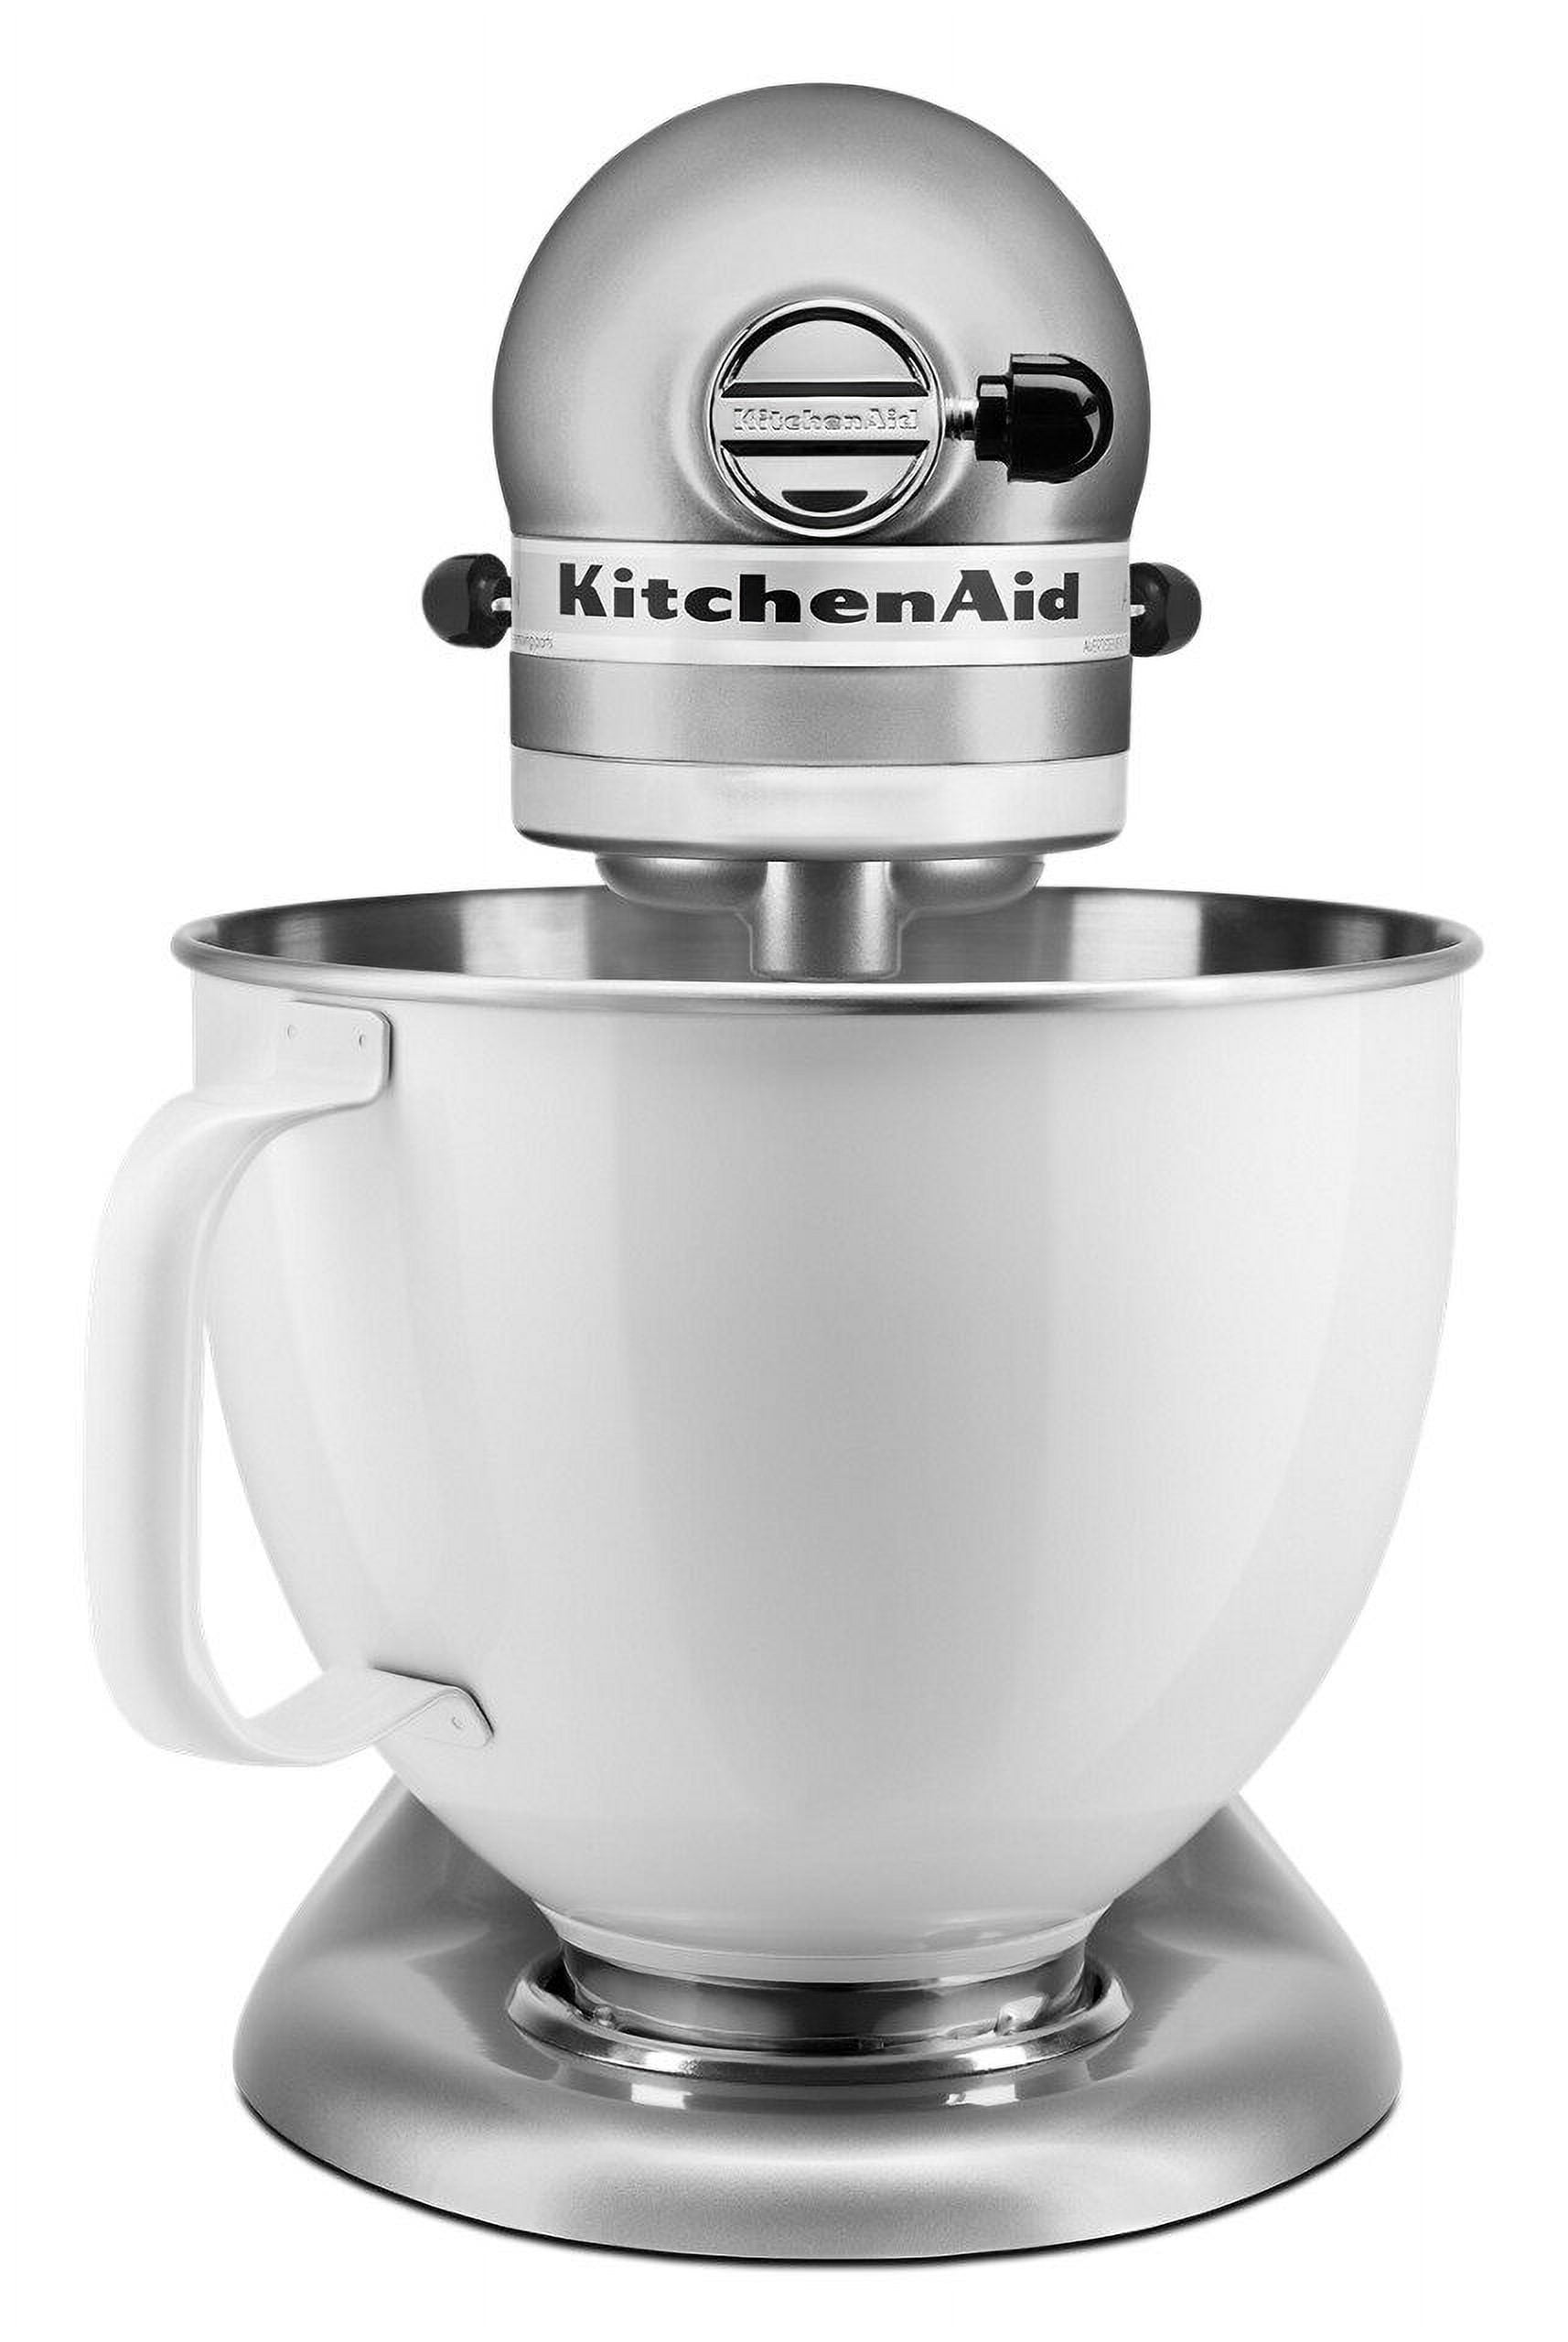 KitchenAid® KSM150FB Artisan Series 5-Quart Tilt-Head Stand